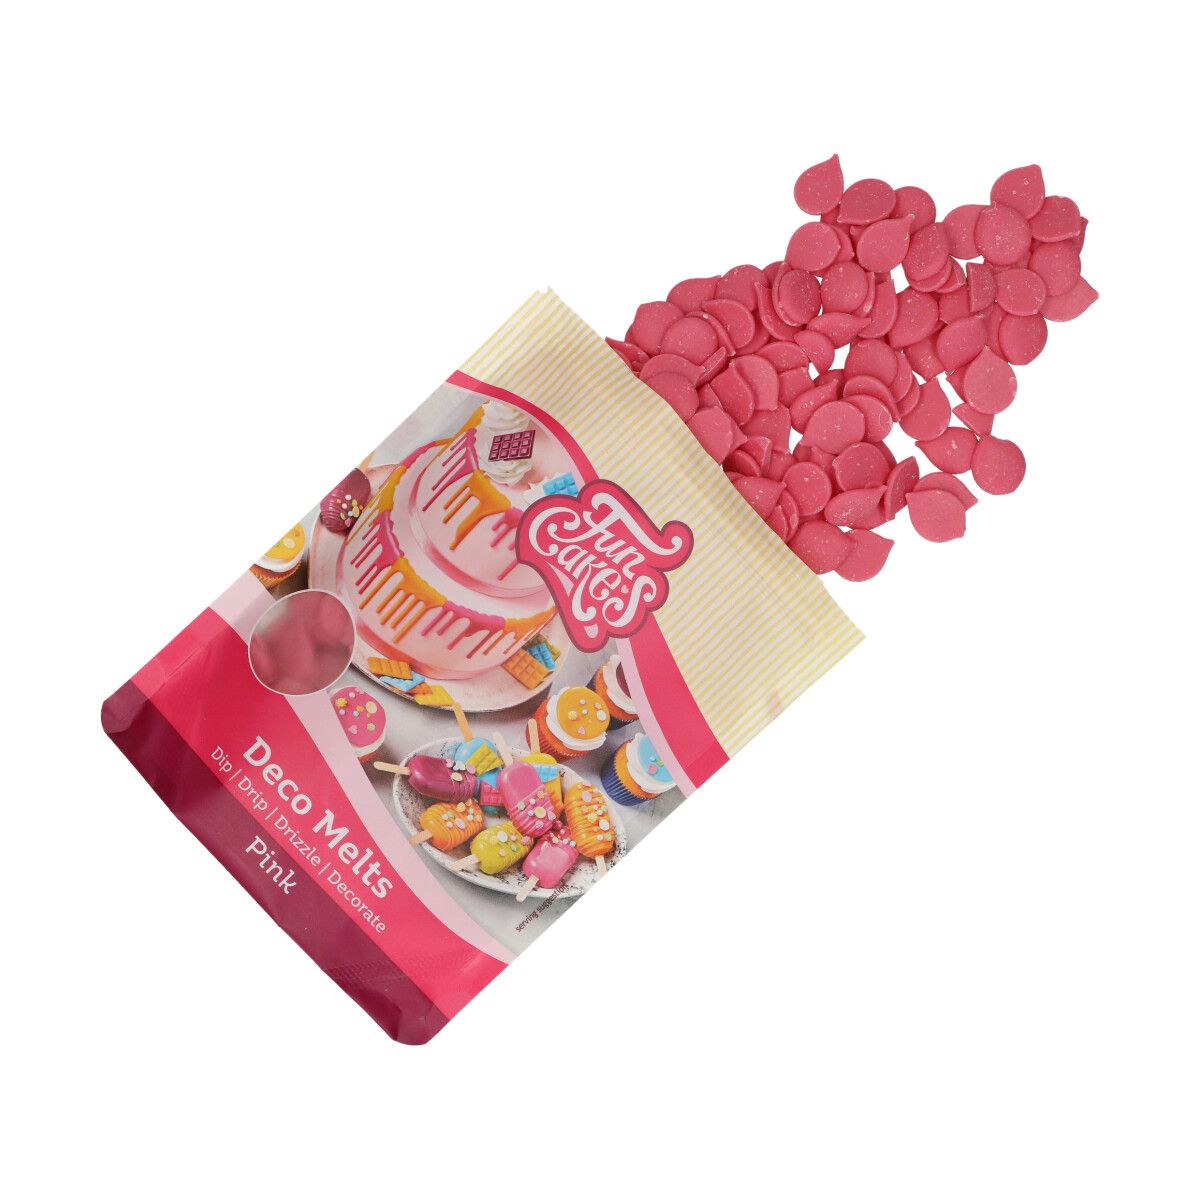 FunCakes Deco Melts -Pink- 250g